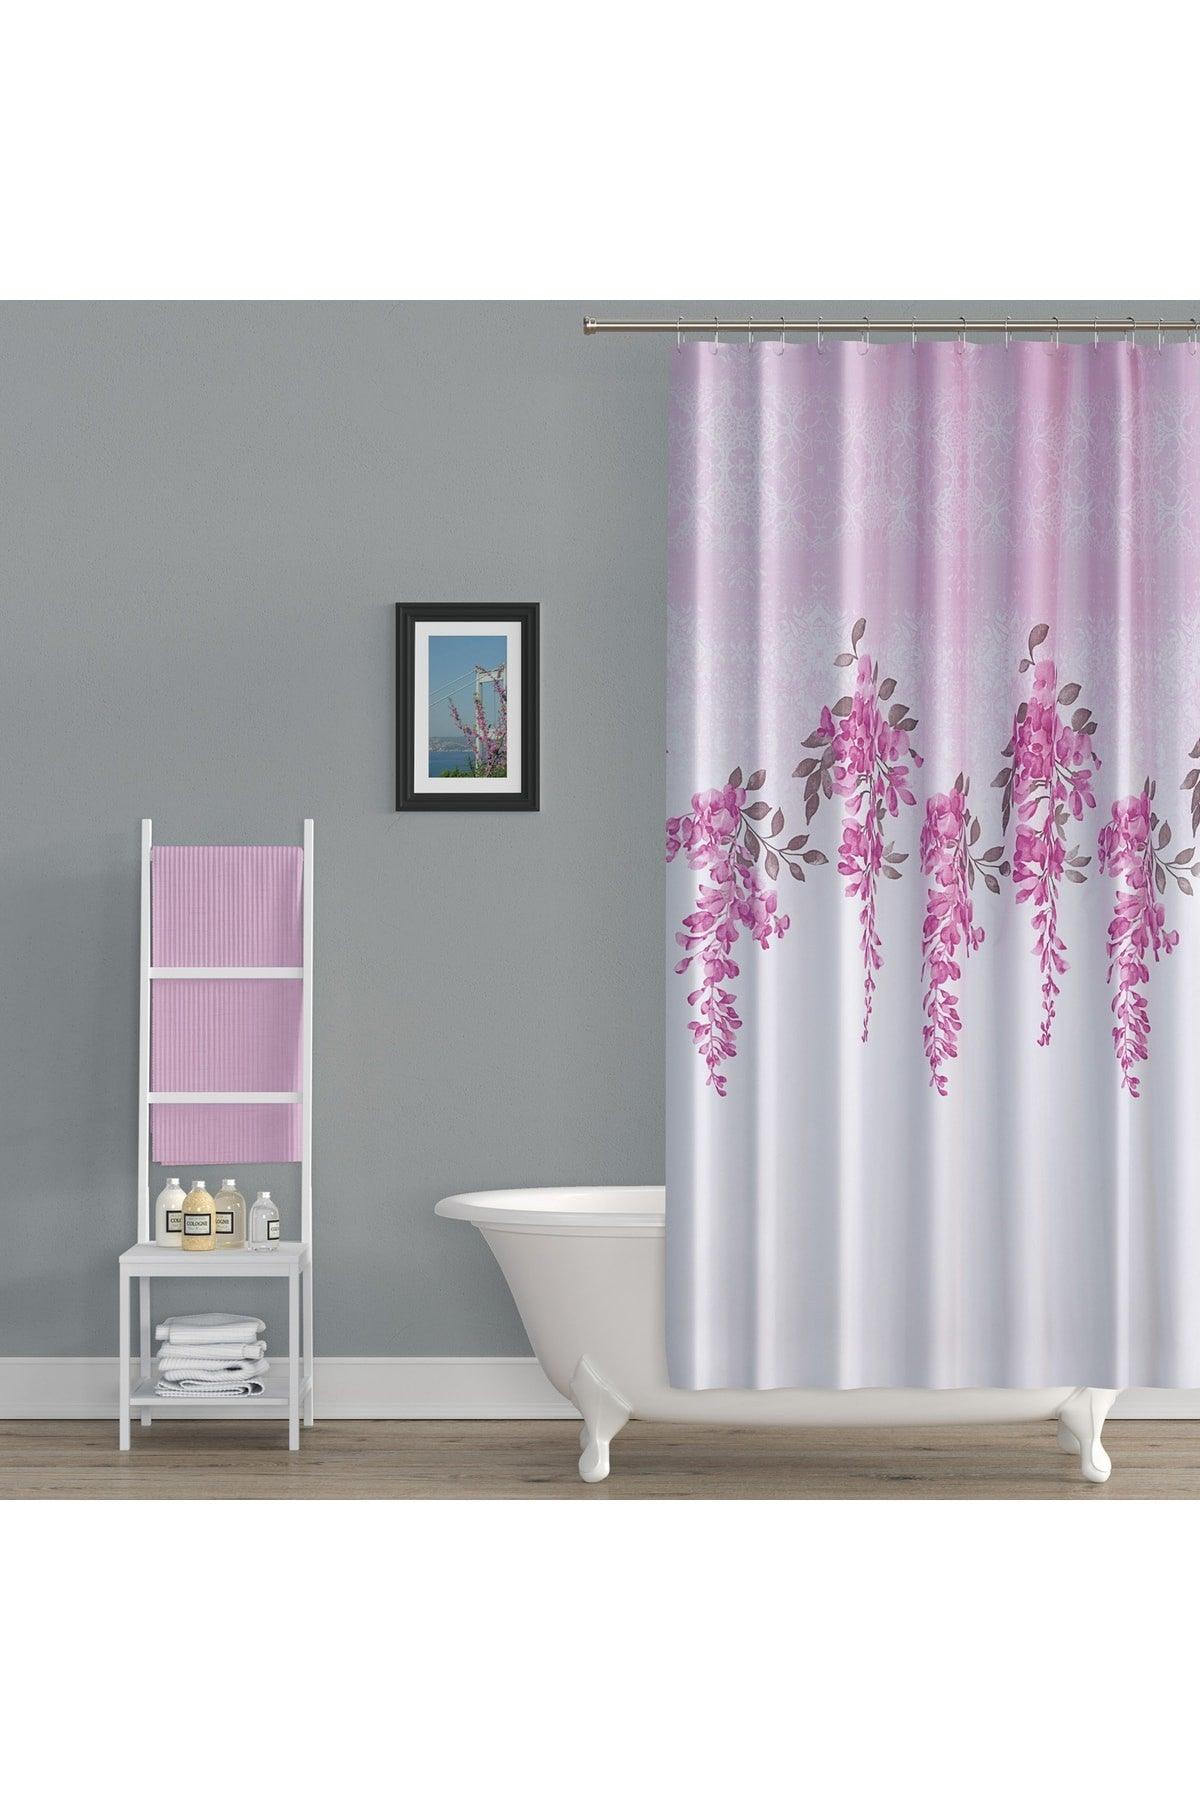 Bath Curtain Ring Bathroom Curtain Cluster